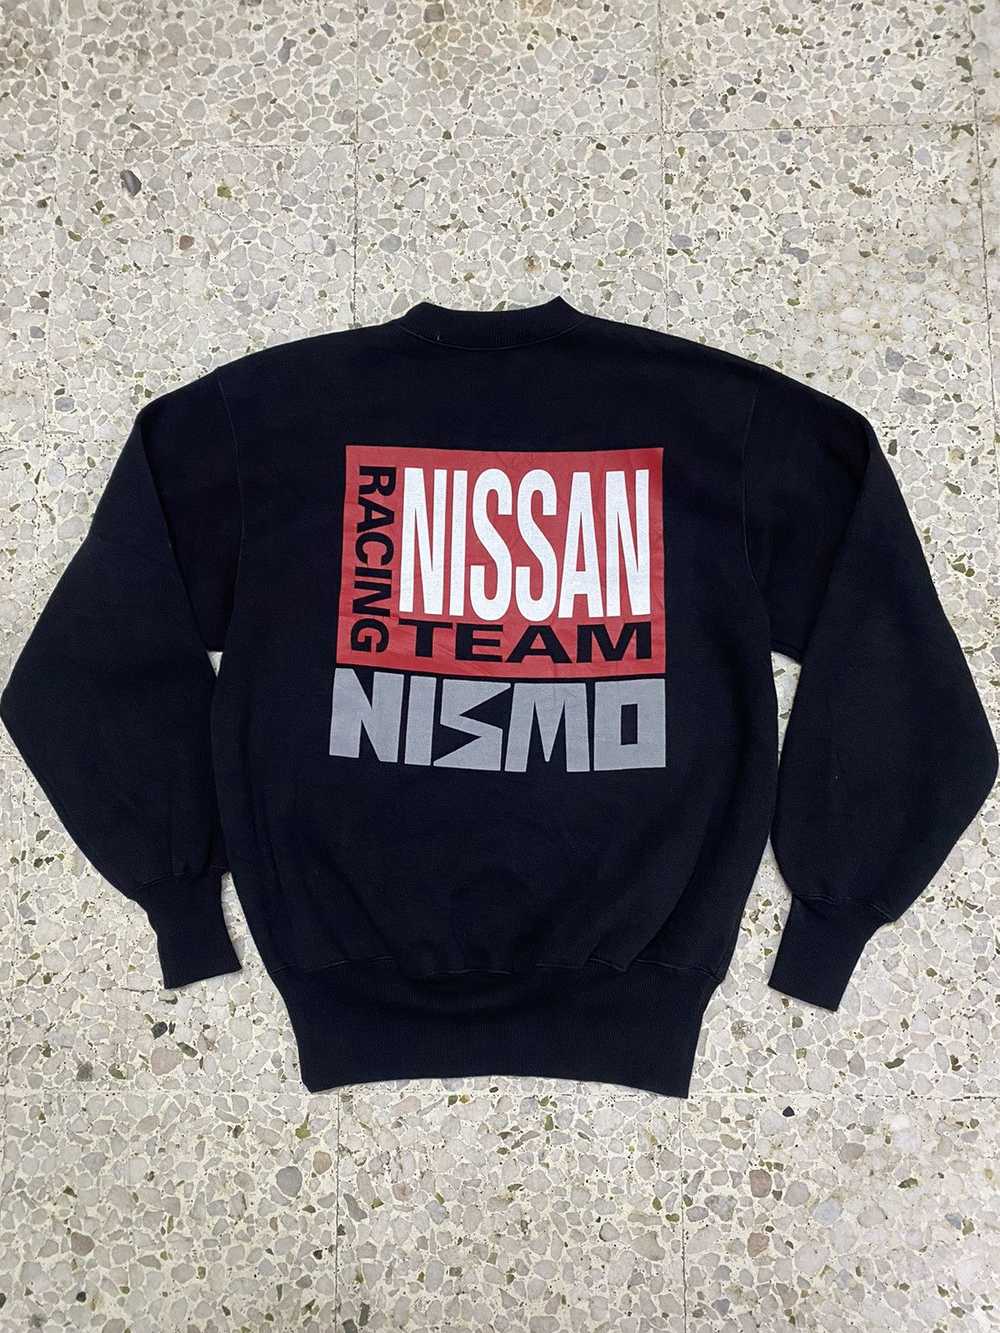 Nismo Nismo Nissan Racing Team - image 2